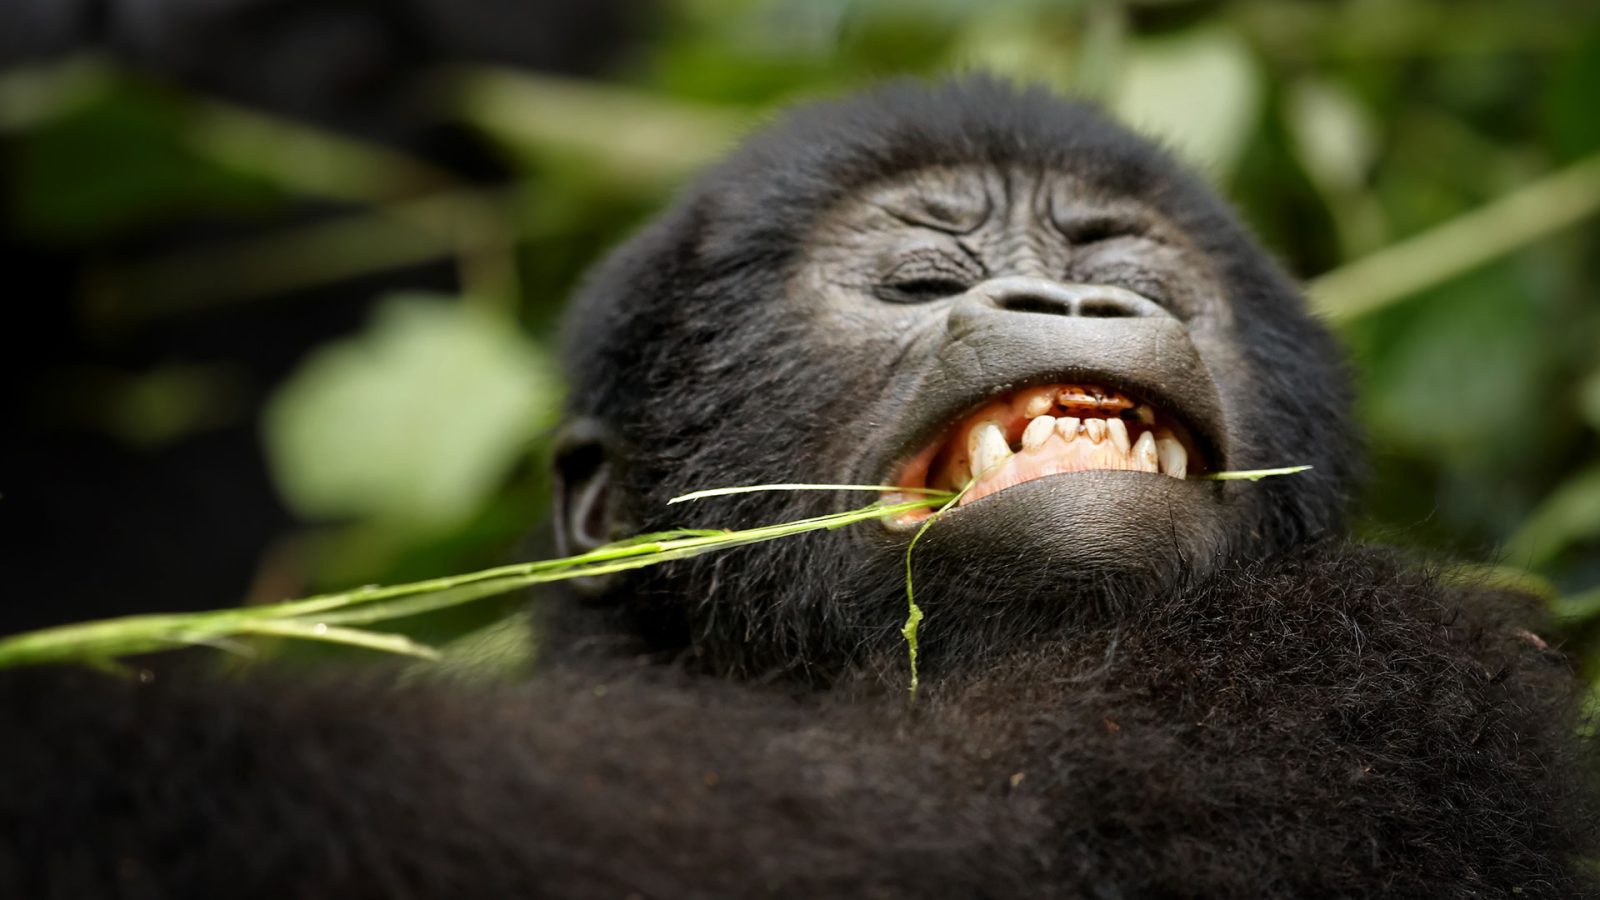 How difficult is Gorilla Trekking?